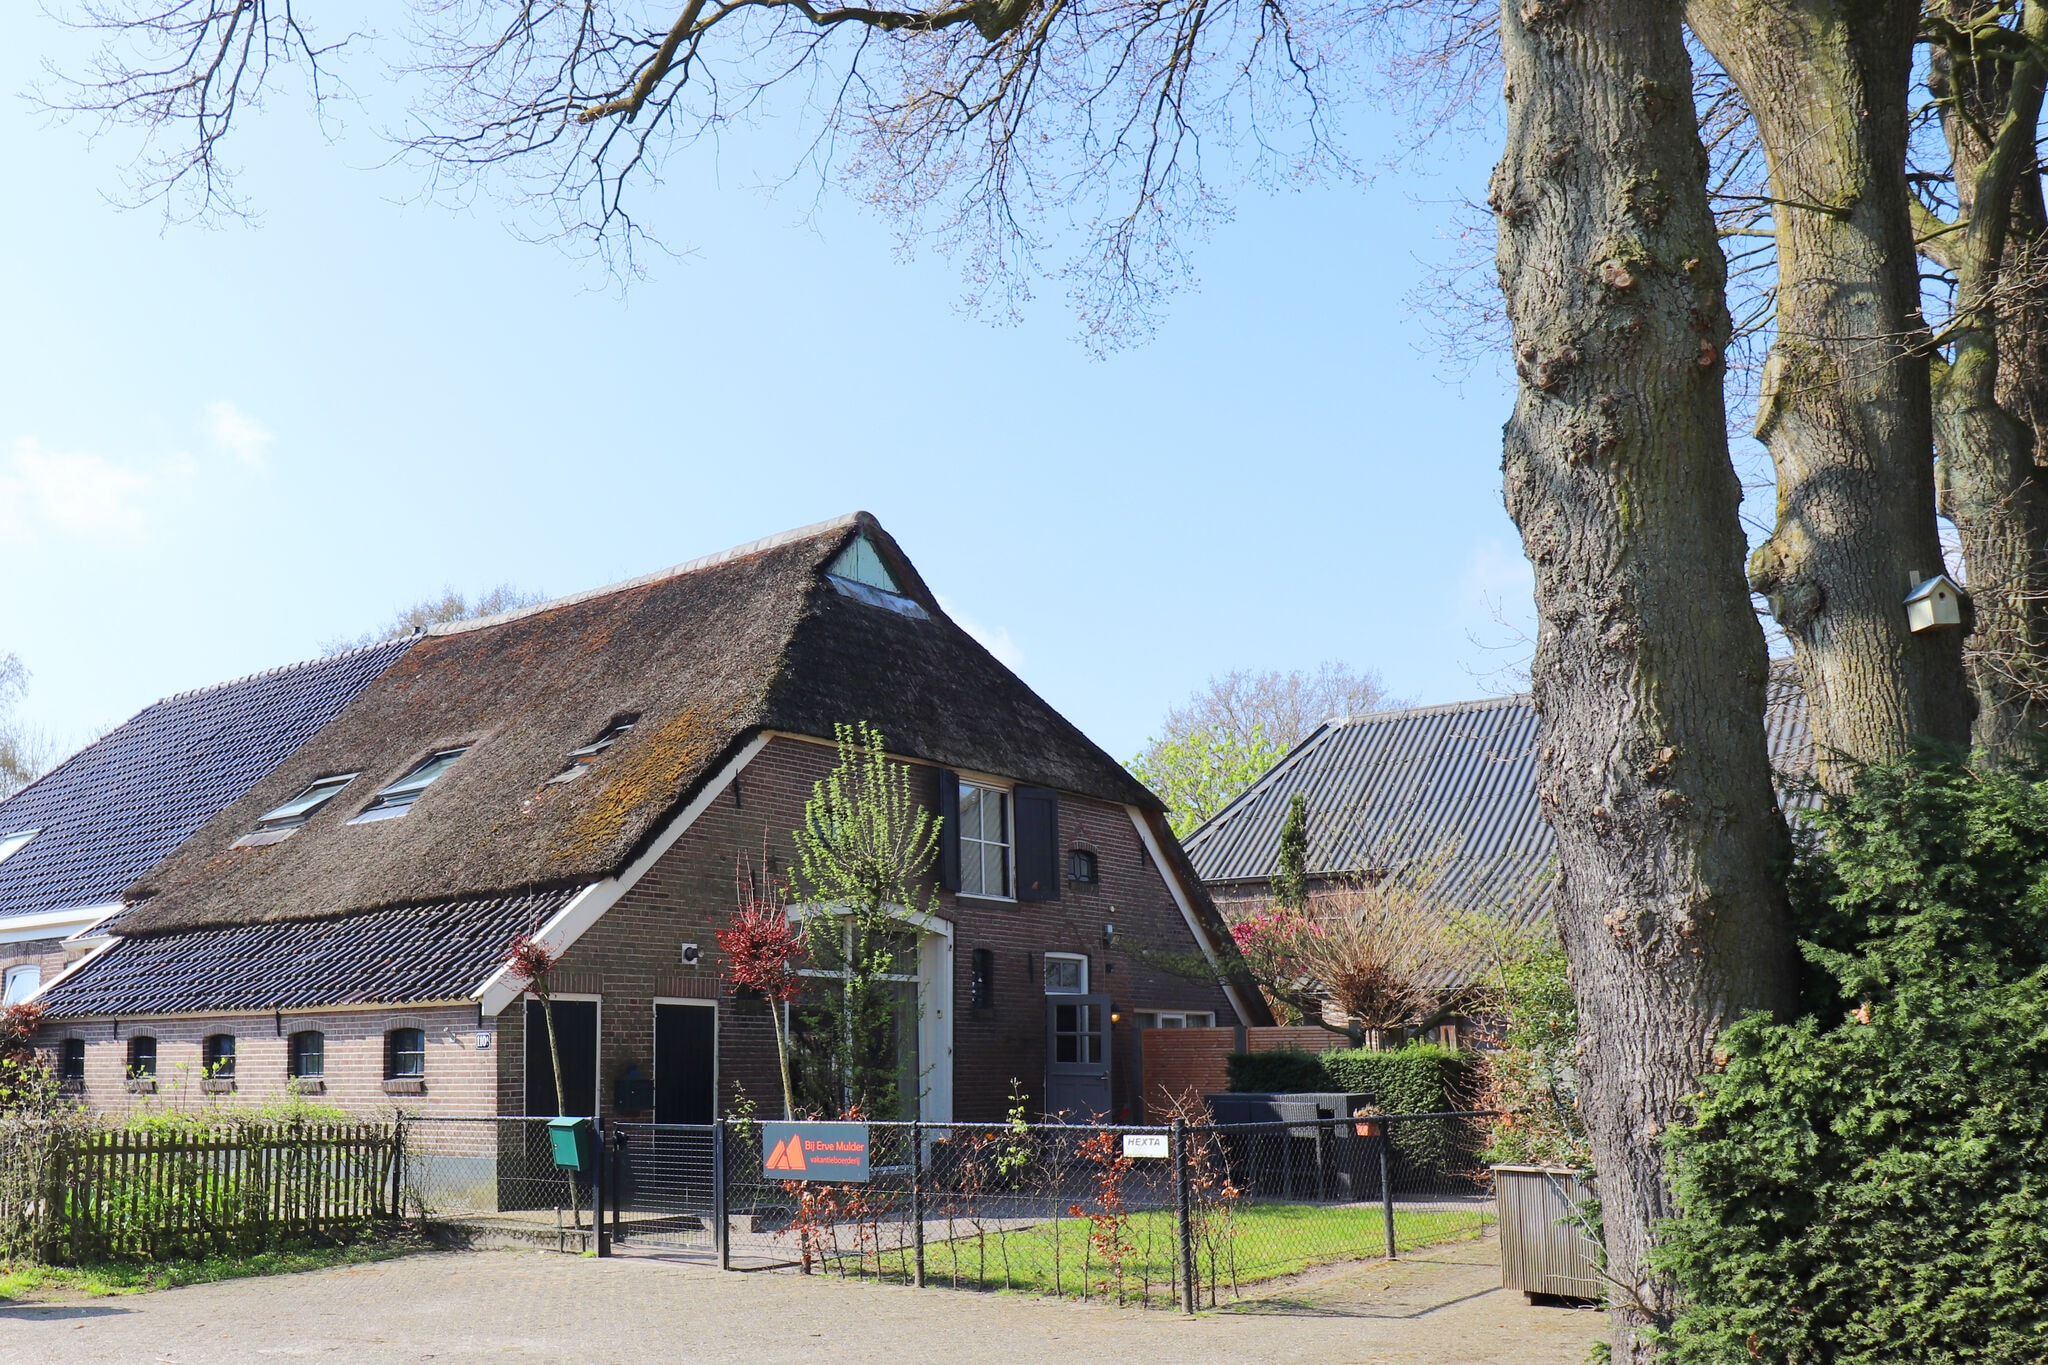 Modern Saxon farmhouse in Dalerveen village